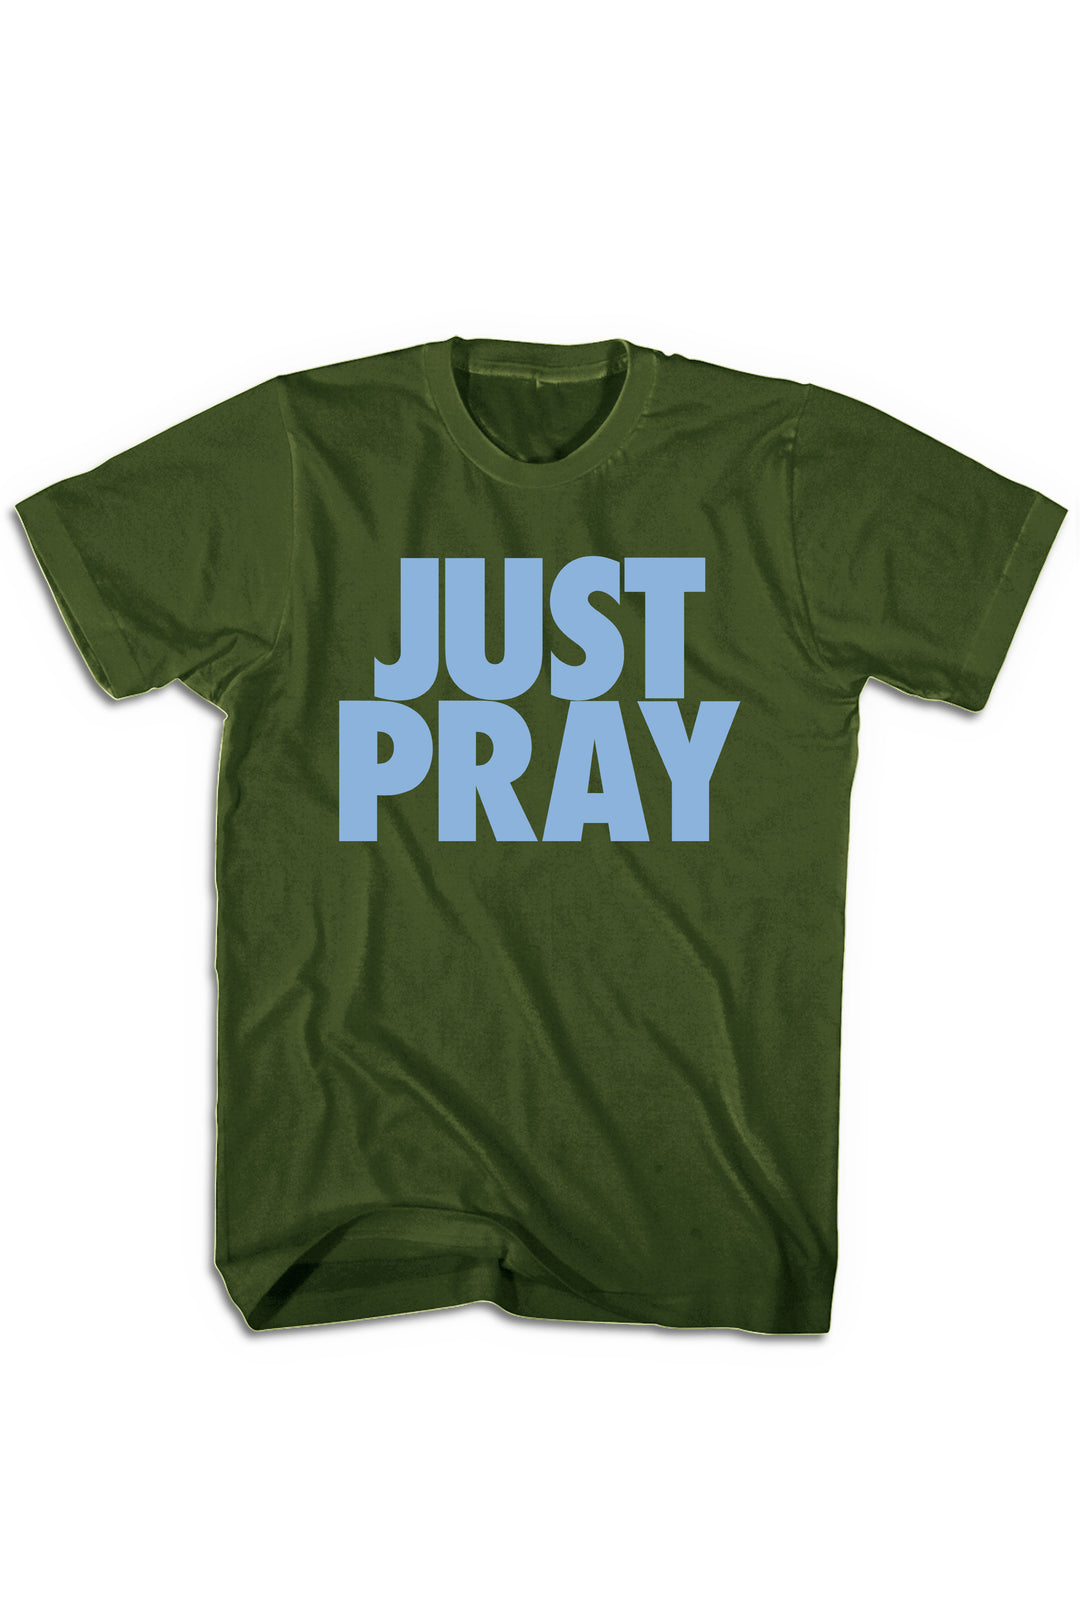 Just Pray Tee (Powder Blue Logo) - Zamage